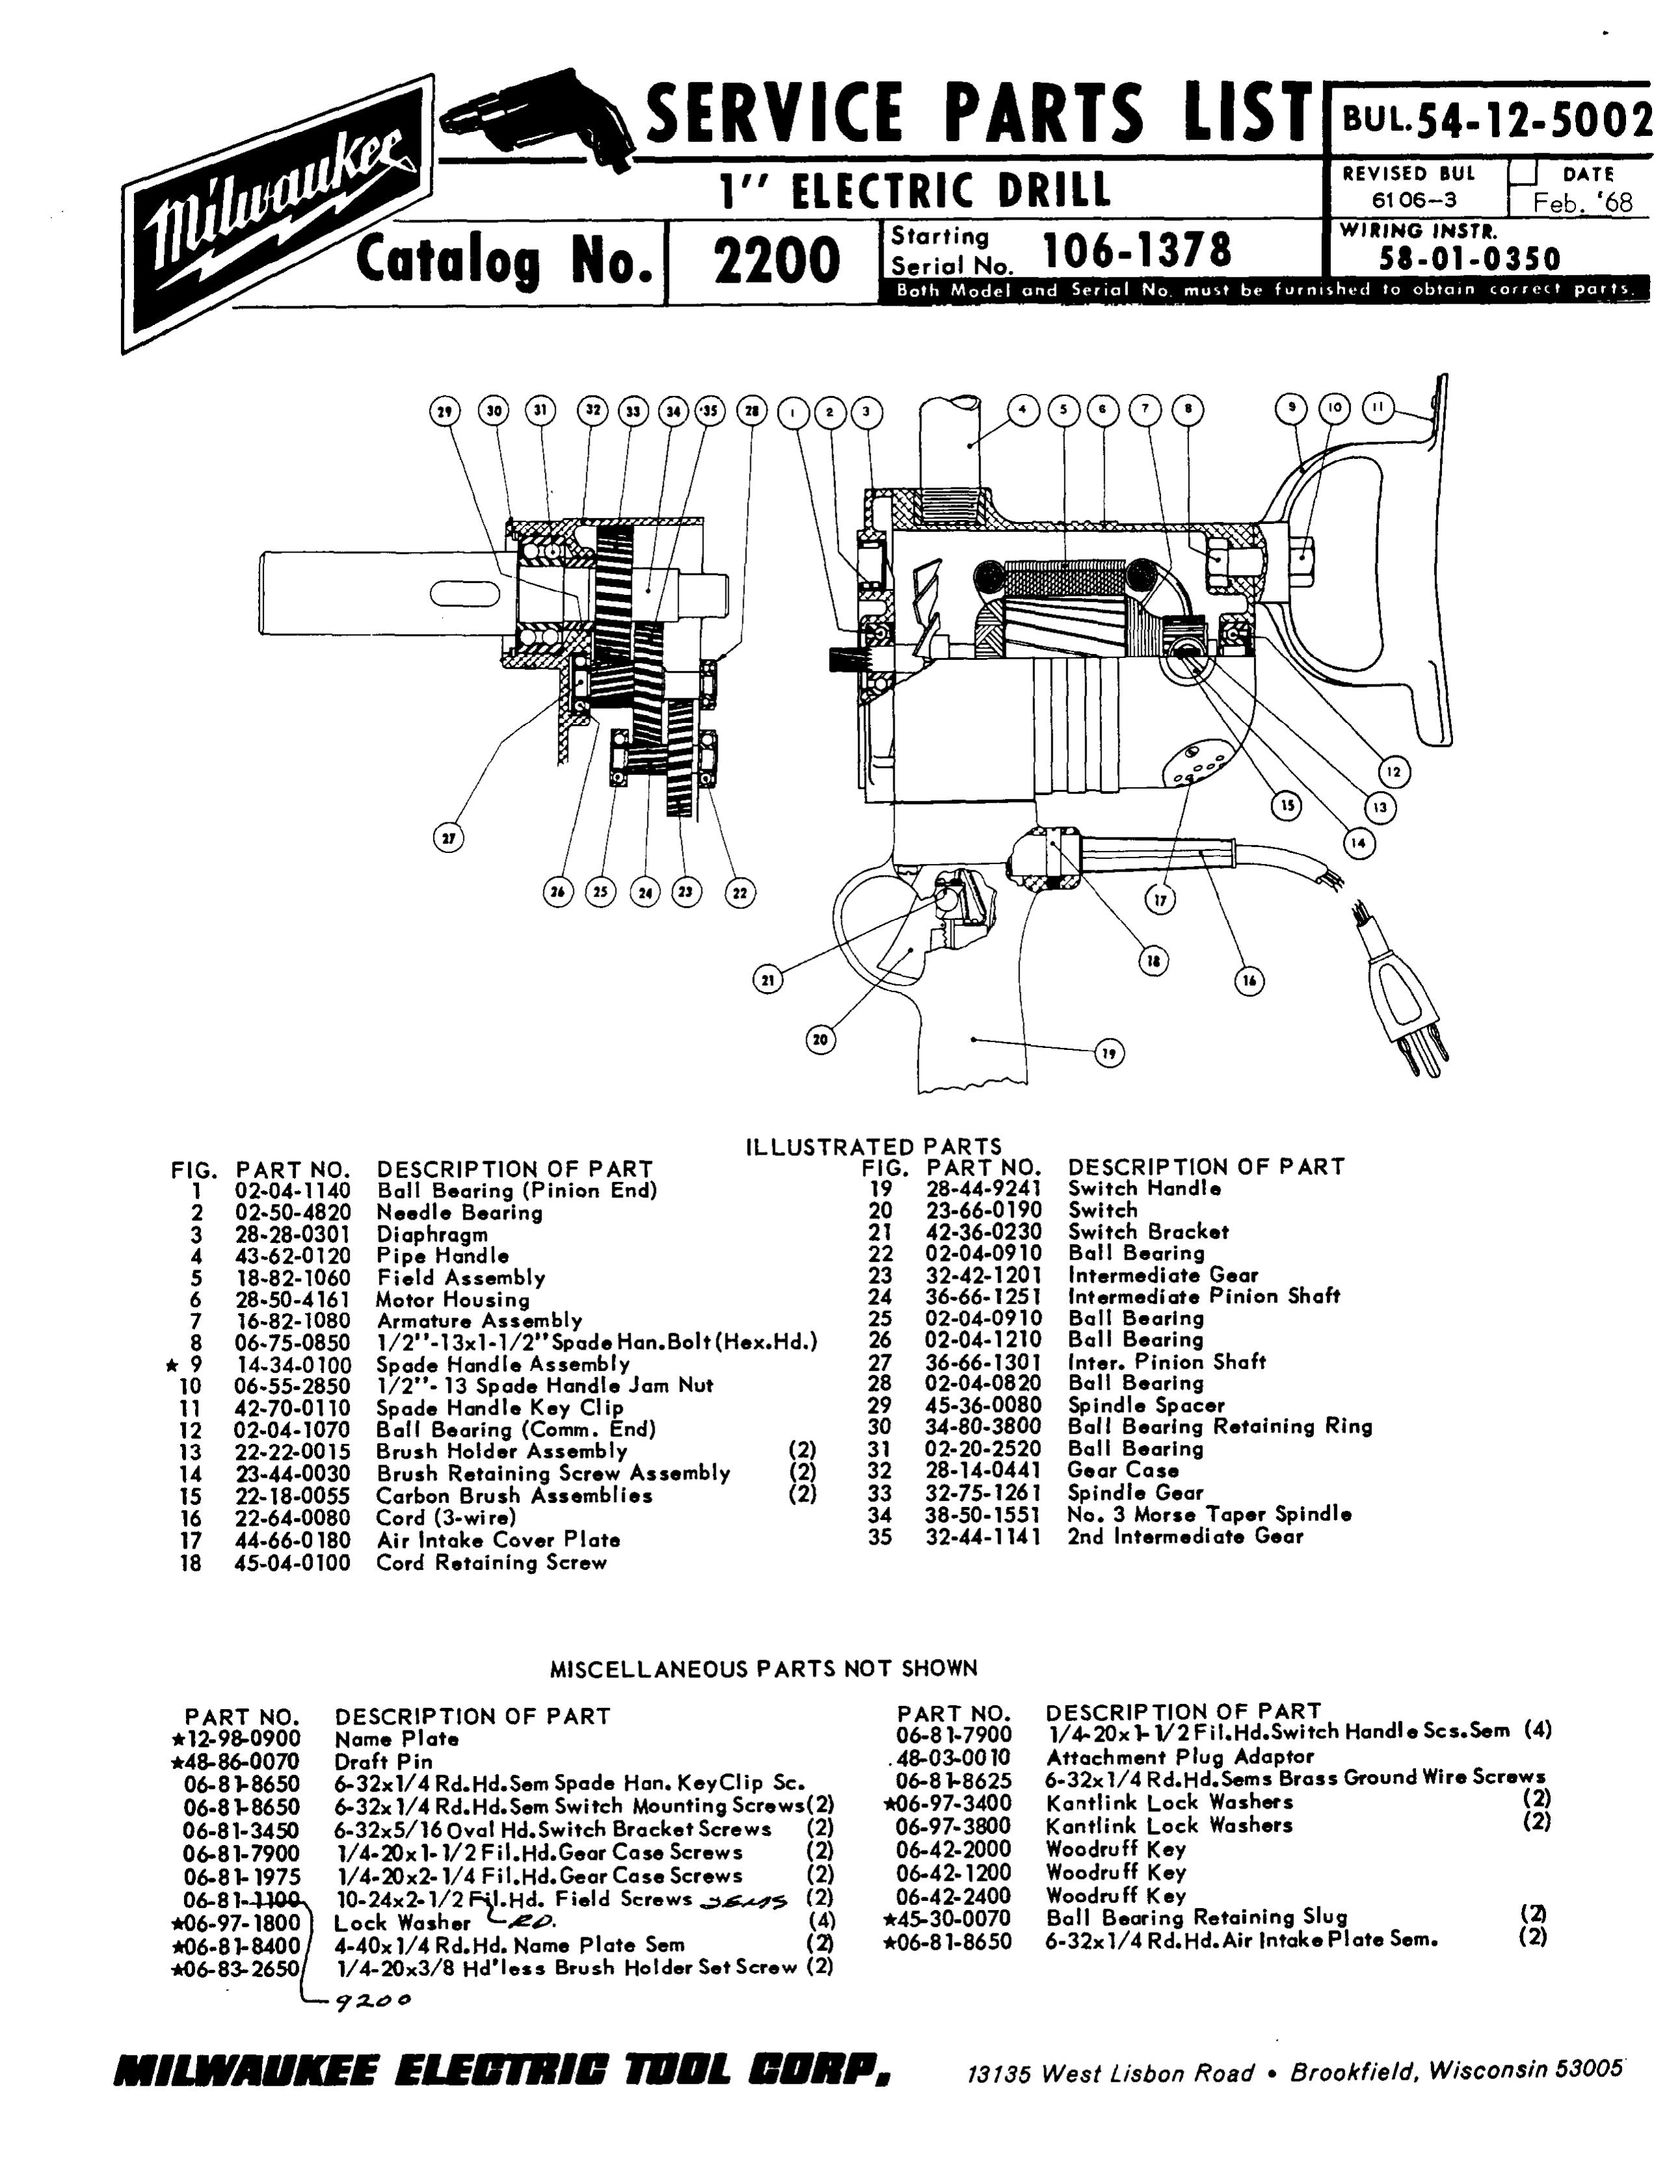 Milwaukee 02.04-1070 Drill User Manual